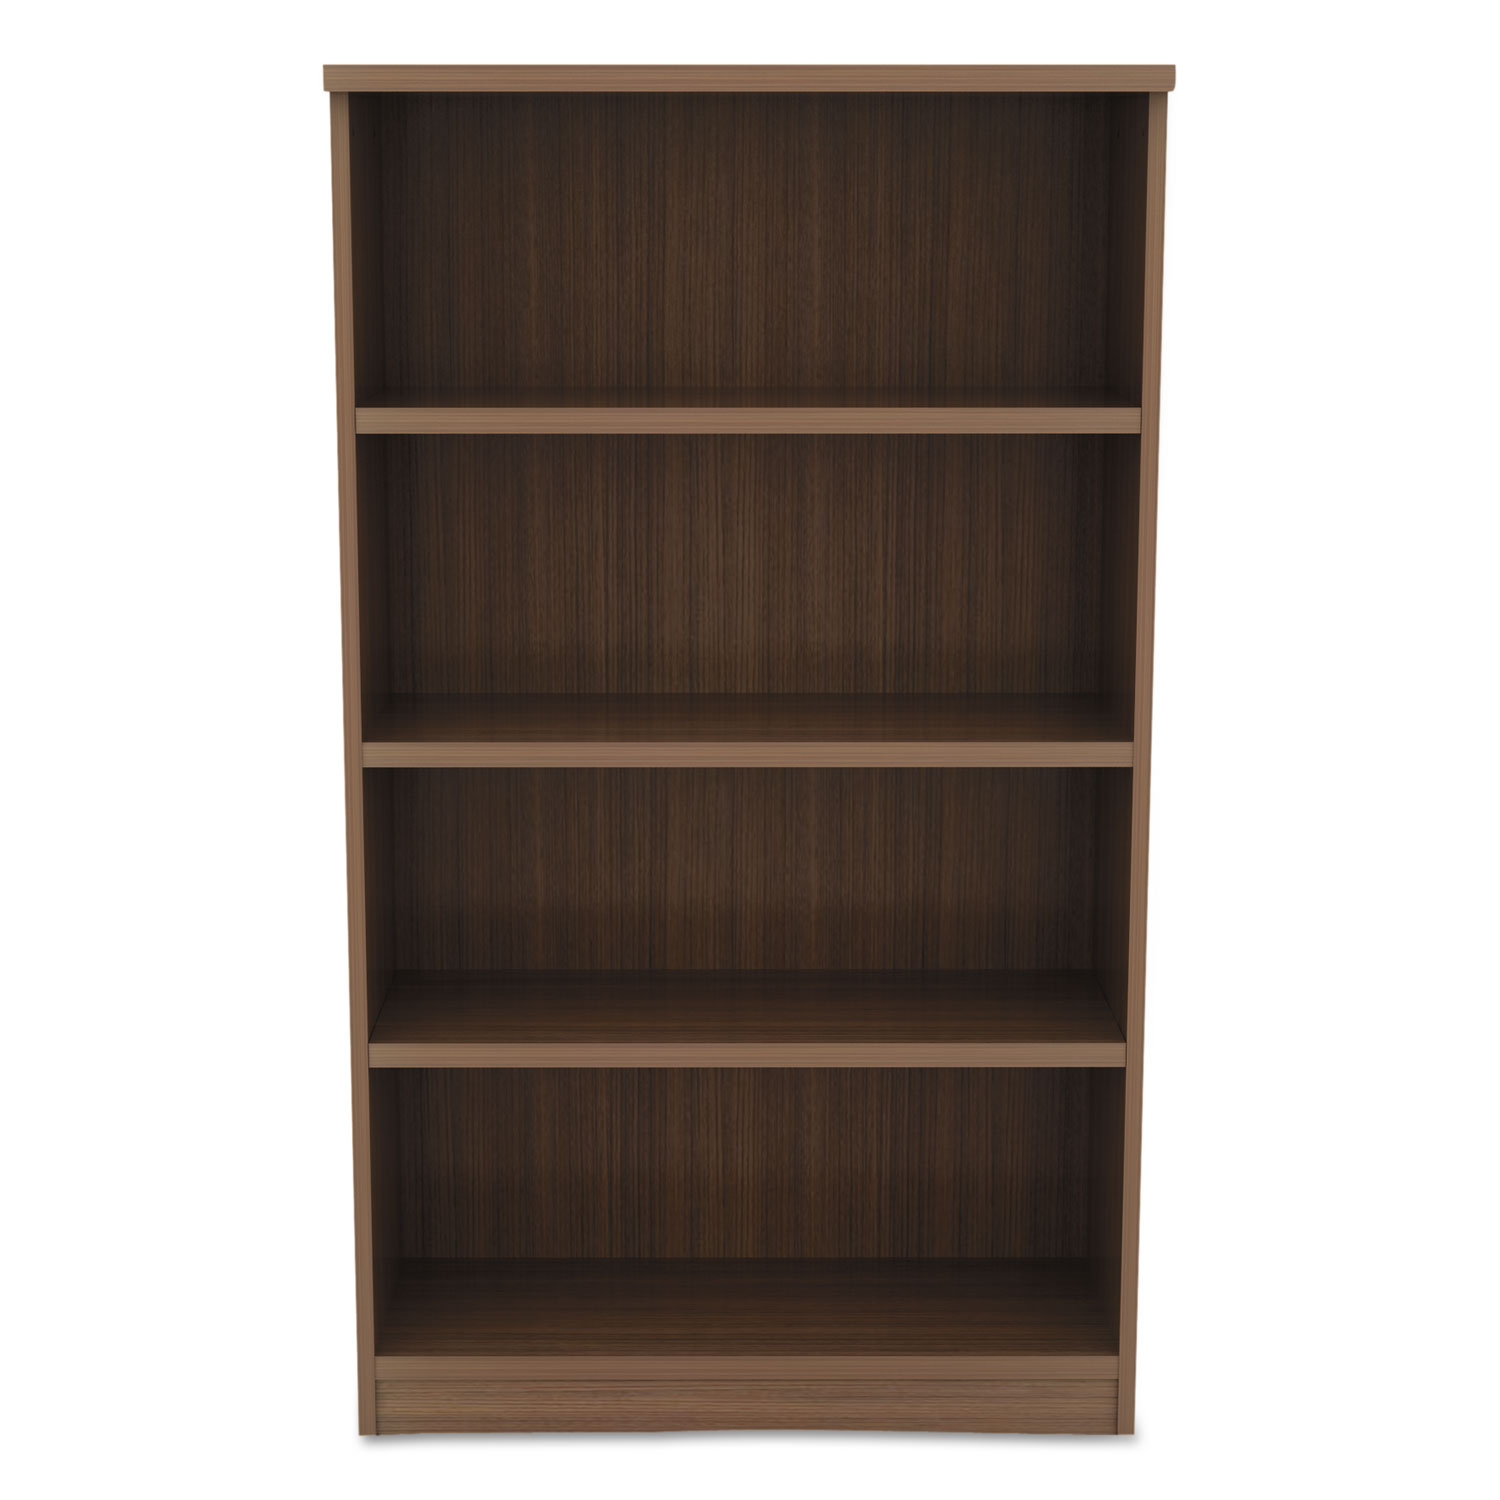 Alera Valencia Series Bookcase, Four-Shelf, 31 3/4w x 14d x 55h, Modern Walnut